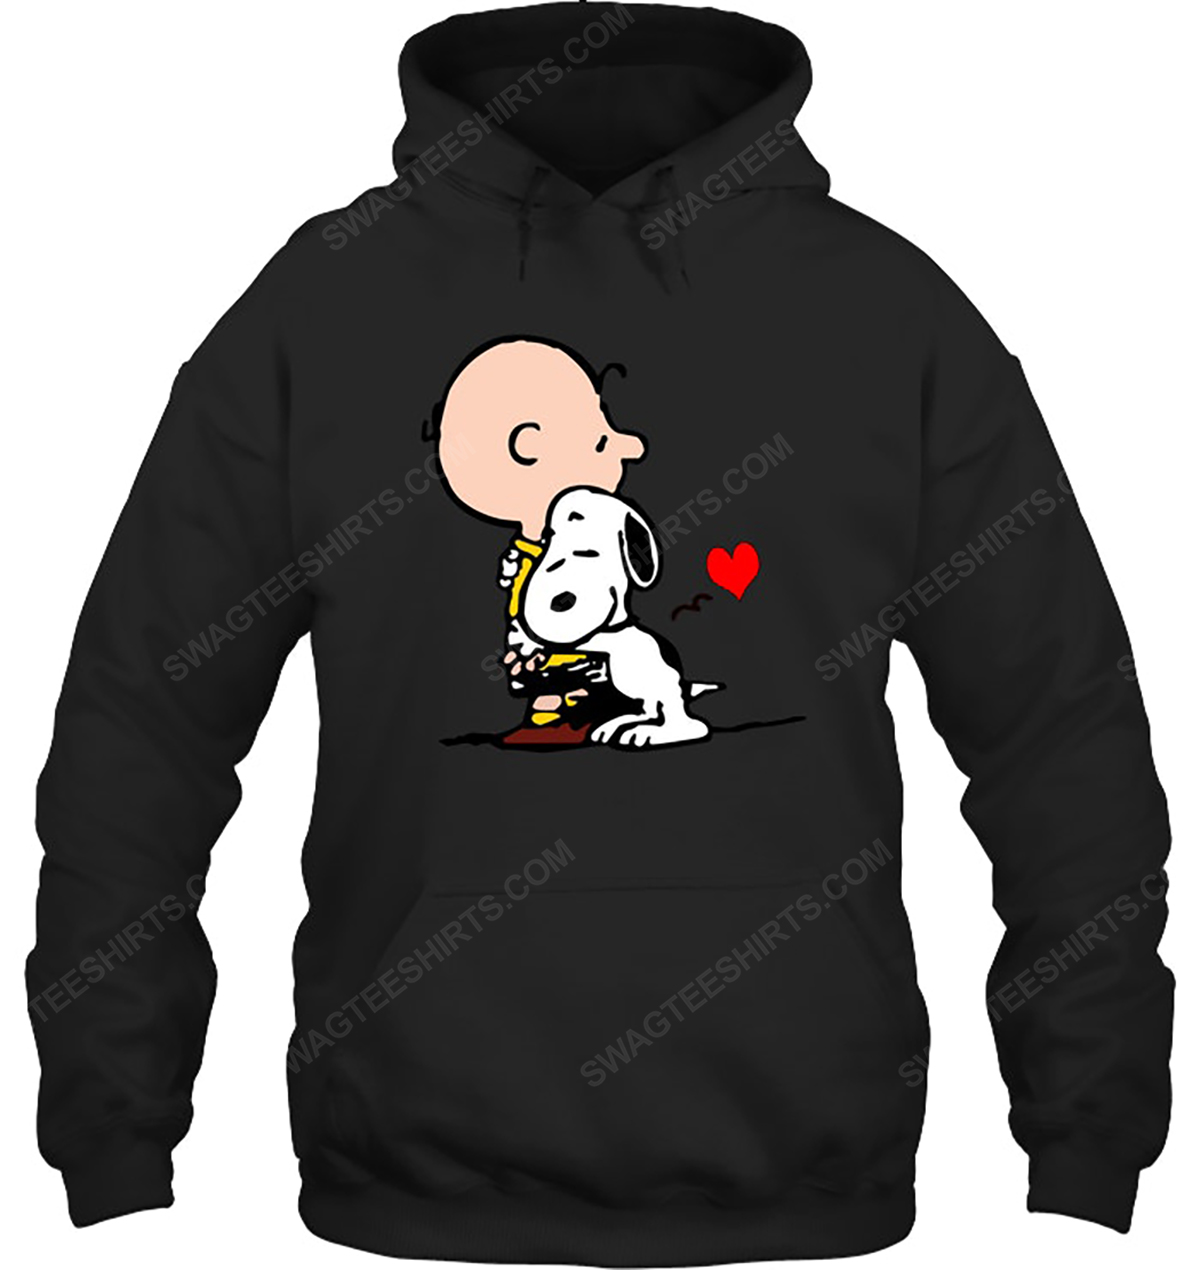 The peanuts snoopy and charlie brown love hoodie 1